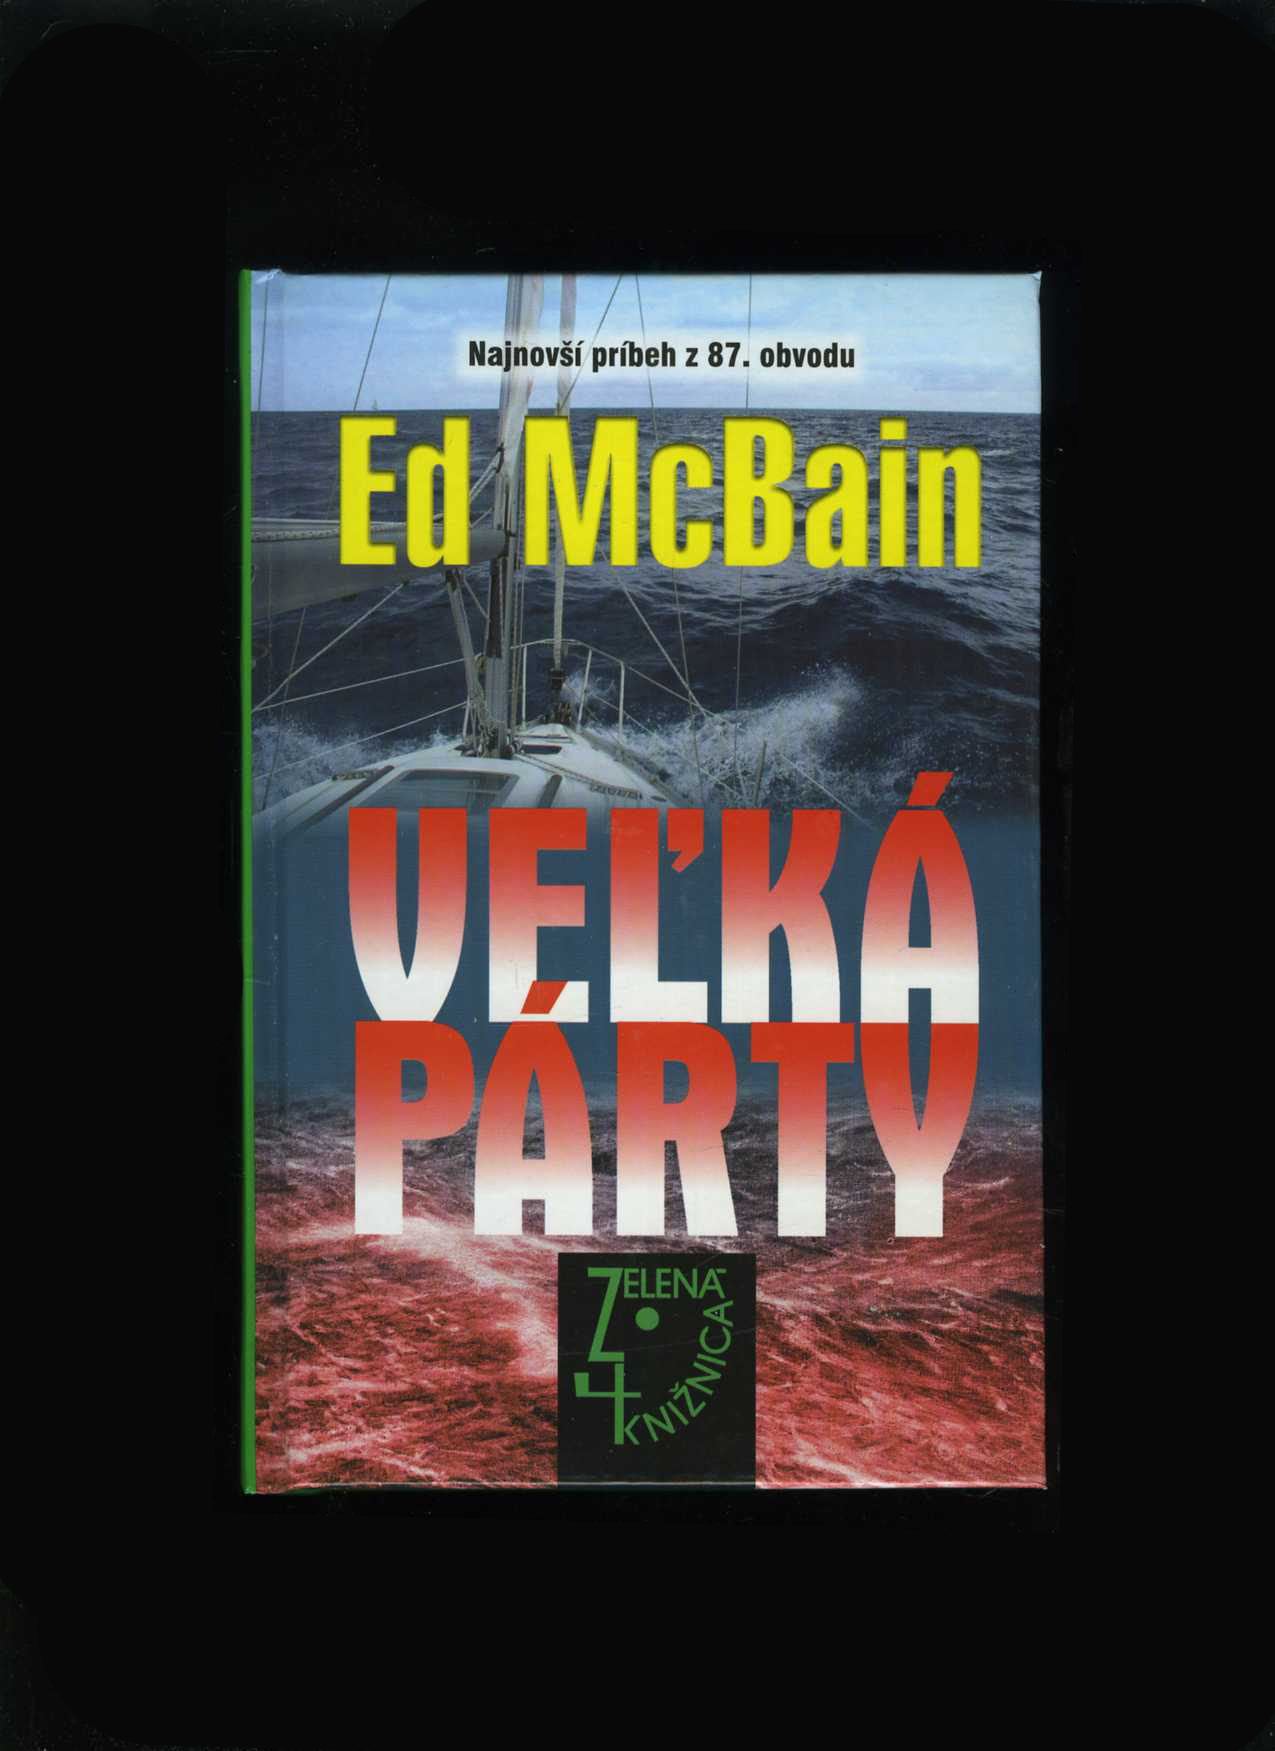 Veľká párty (Ed McBain)